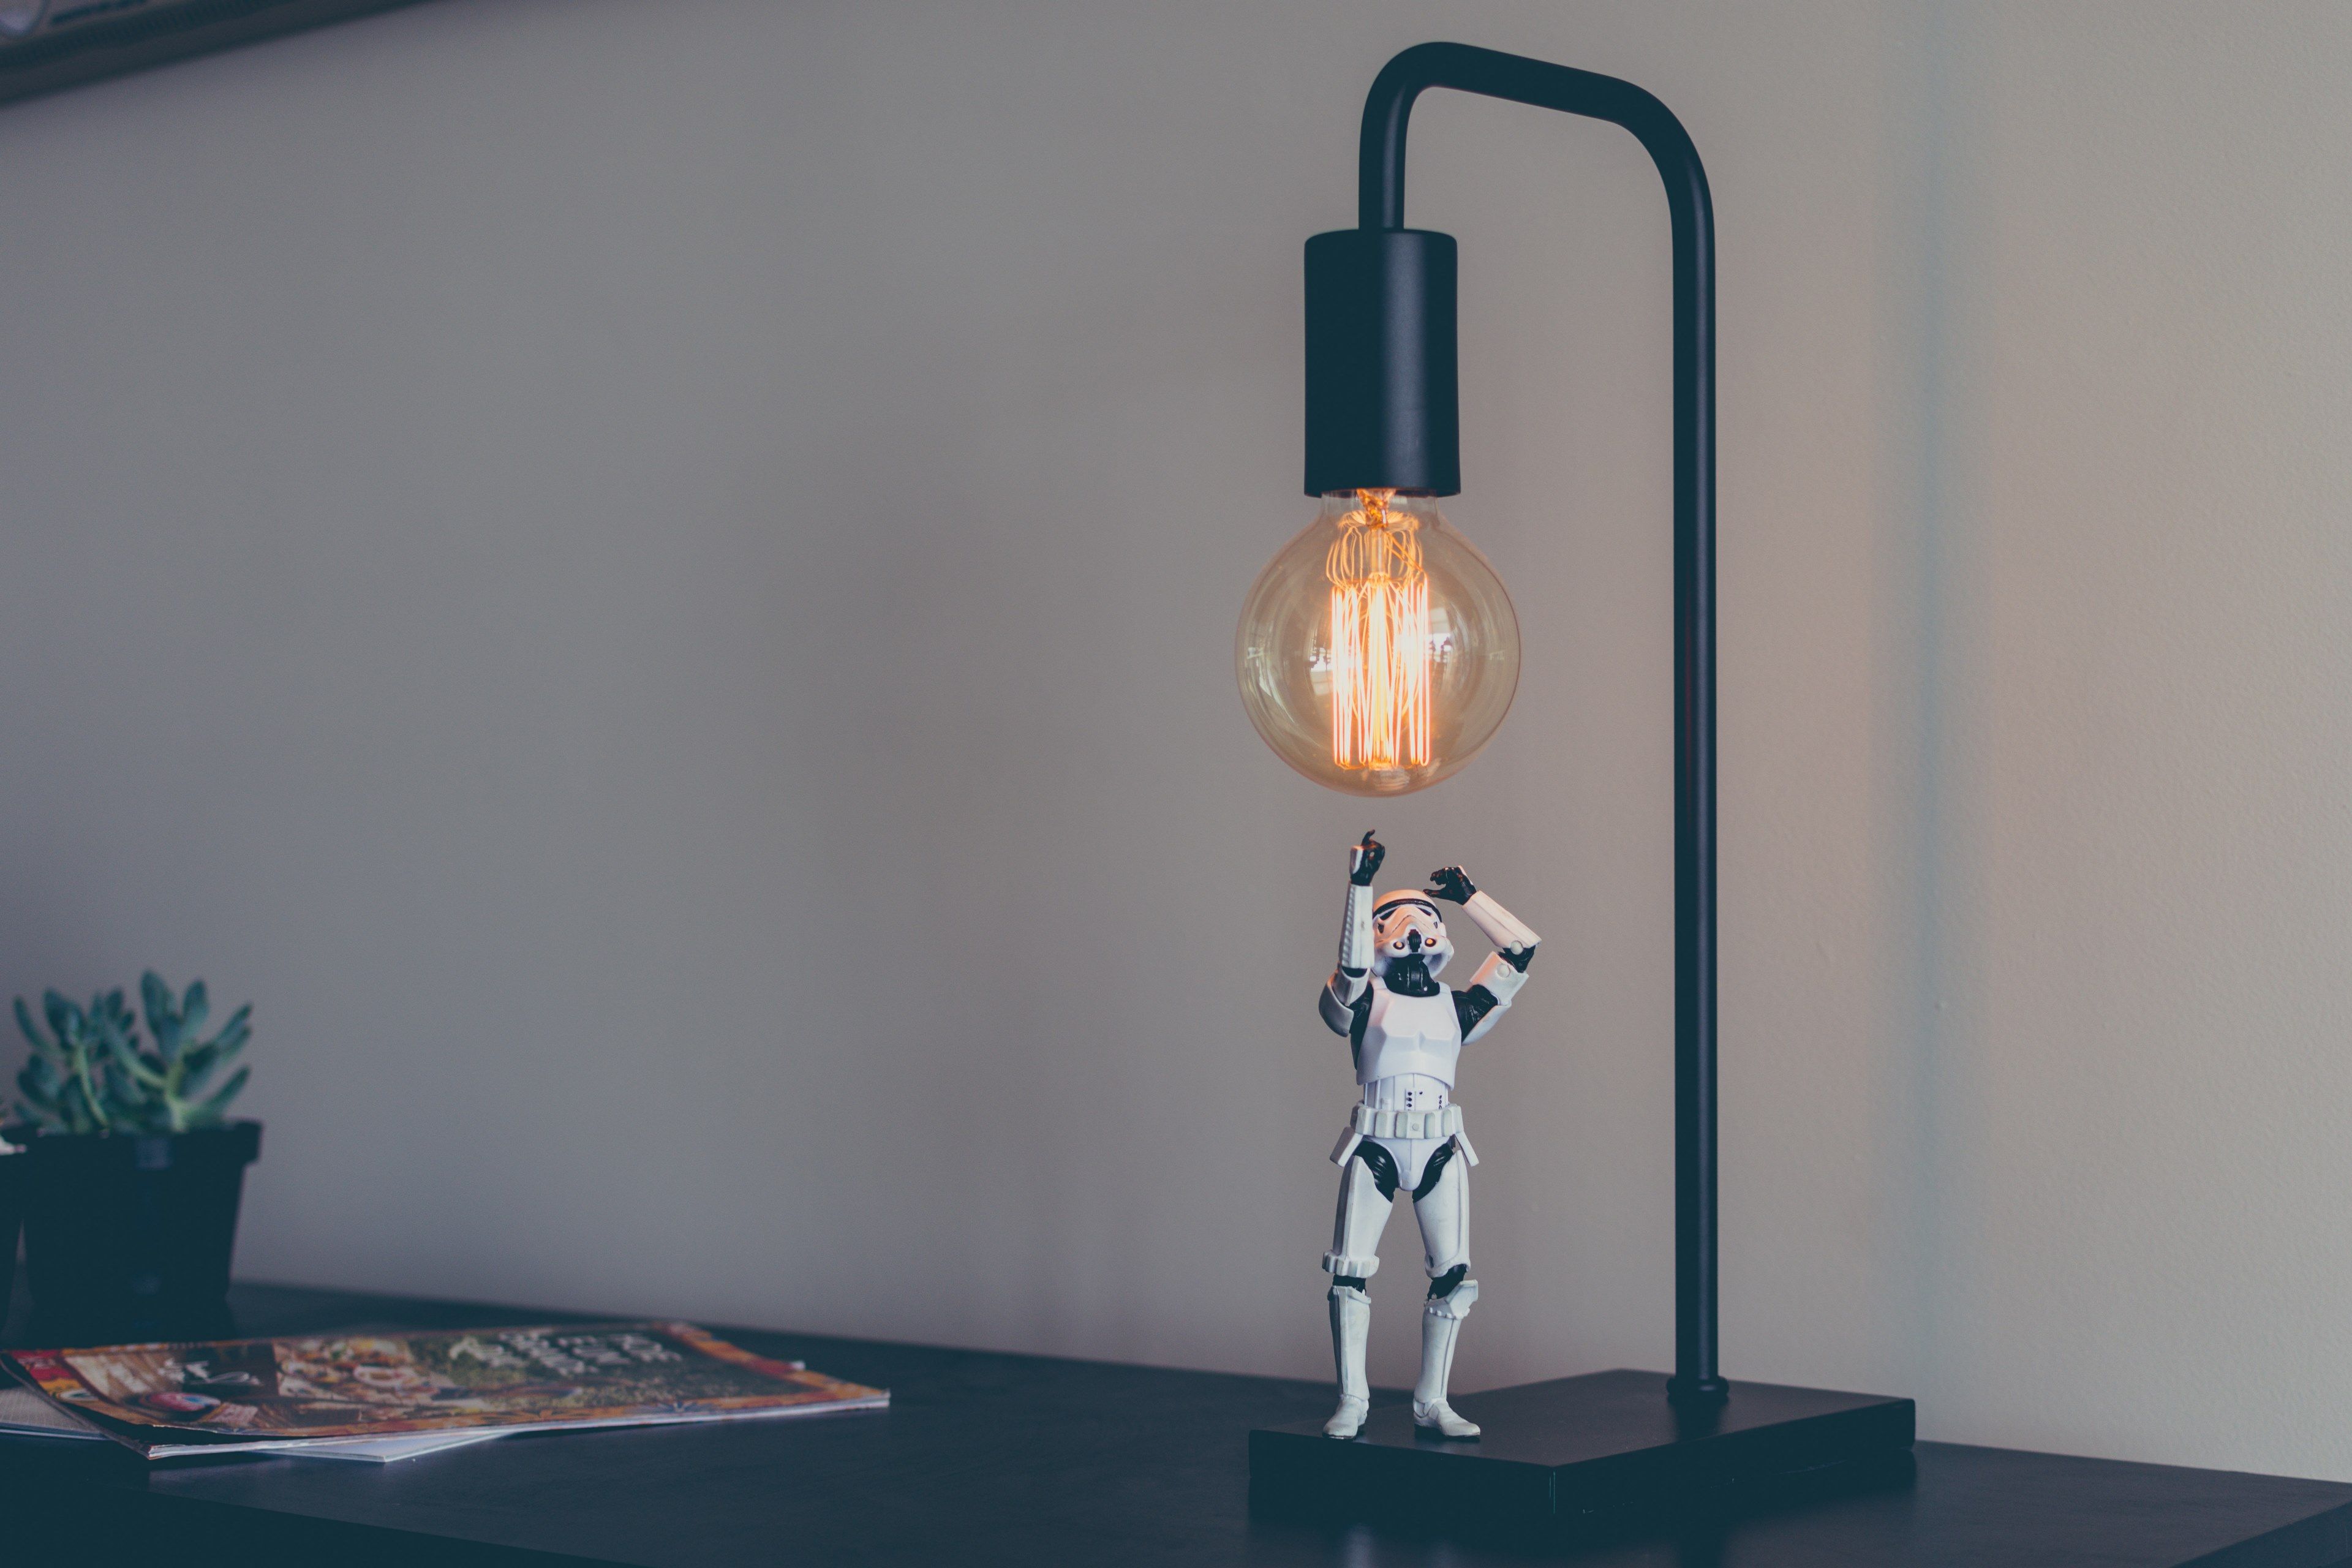 Wallpaper / a figurine of a stormtrooper under a desk lamp with an incandescent light bulb, bright idea 4k wallpaper